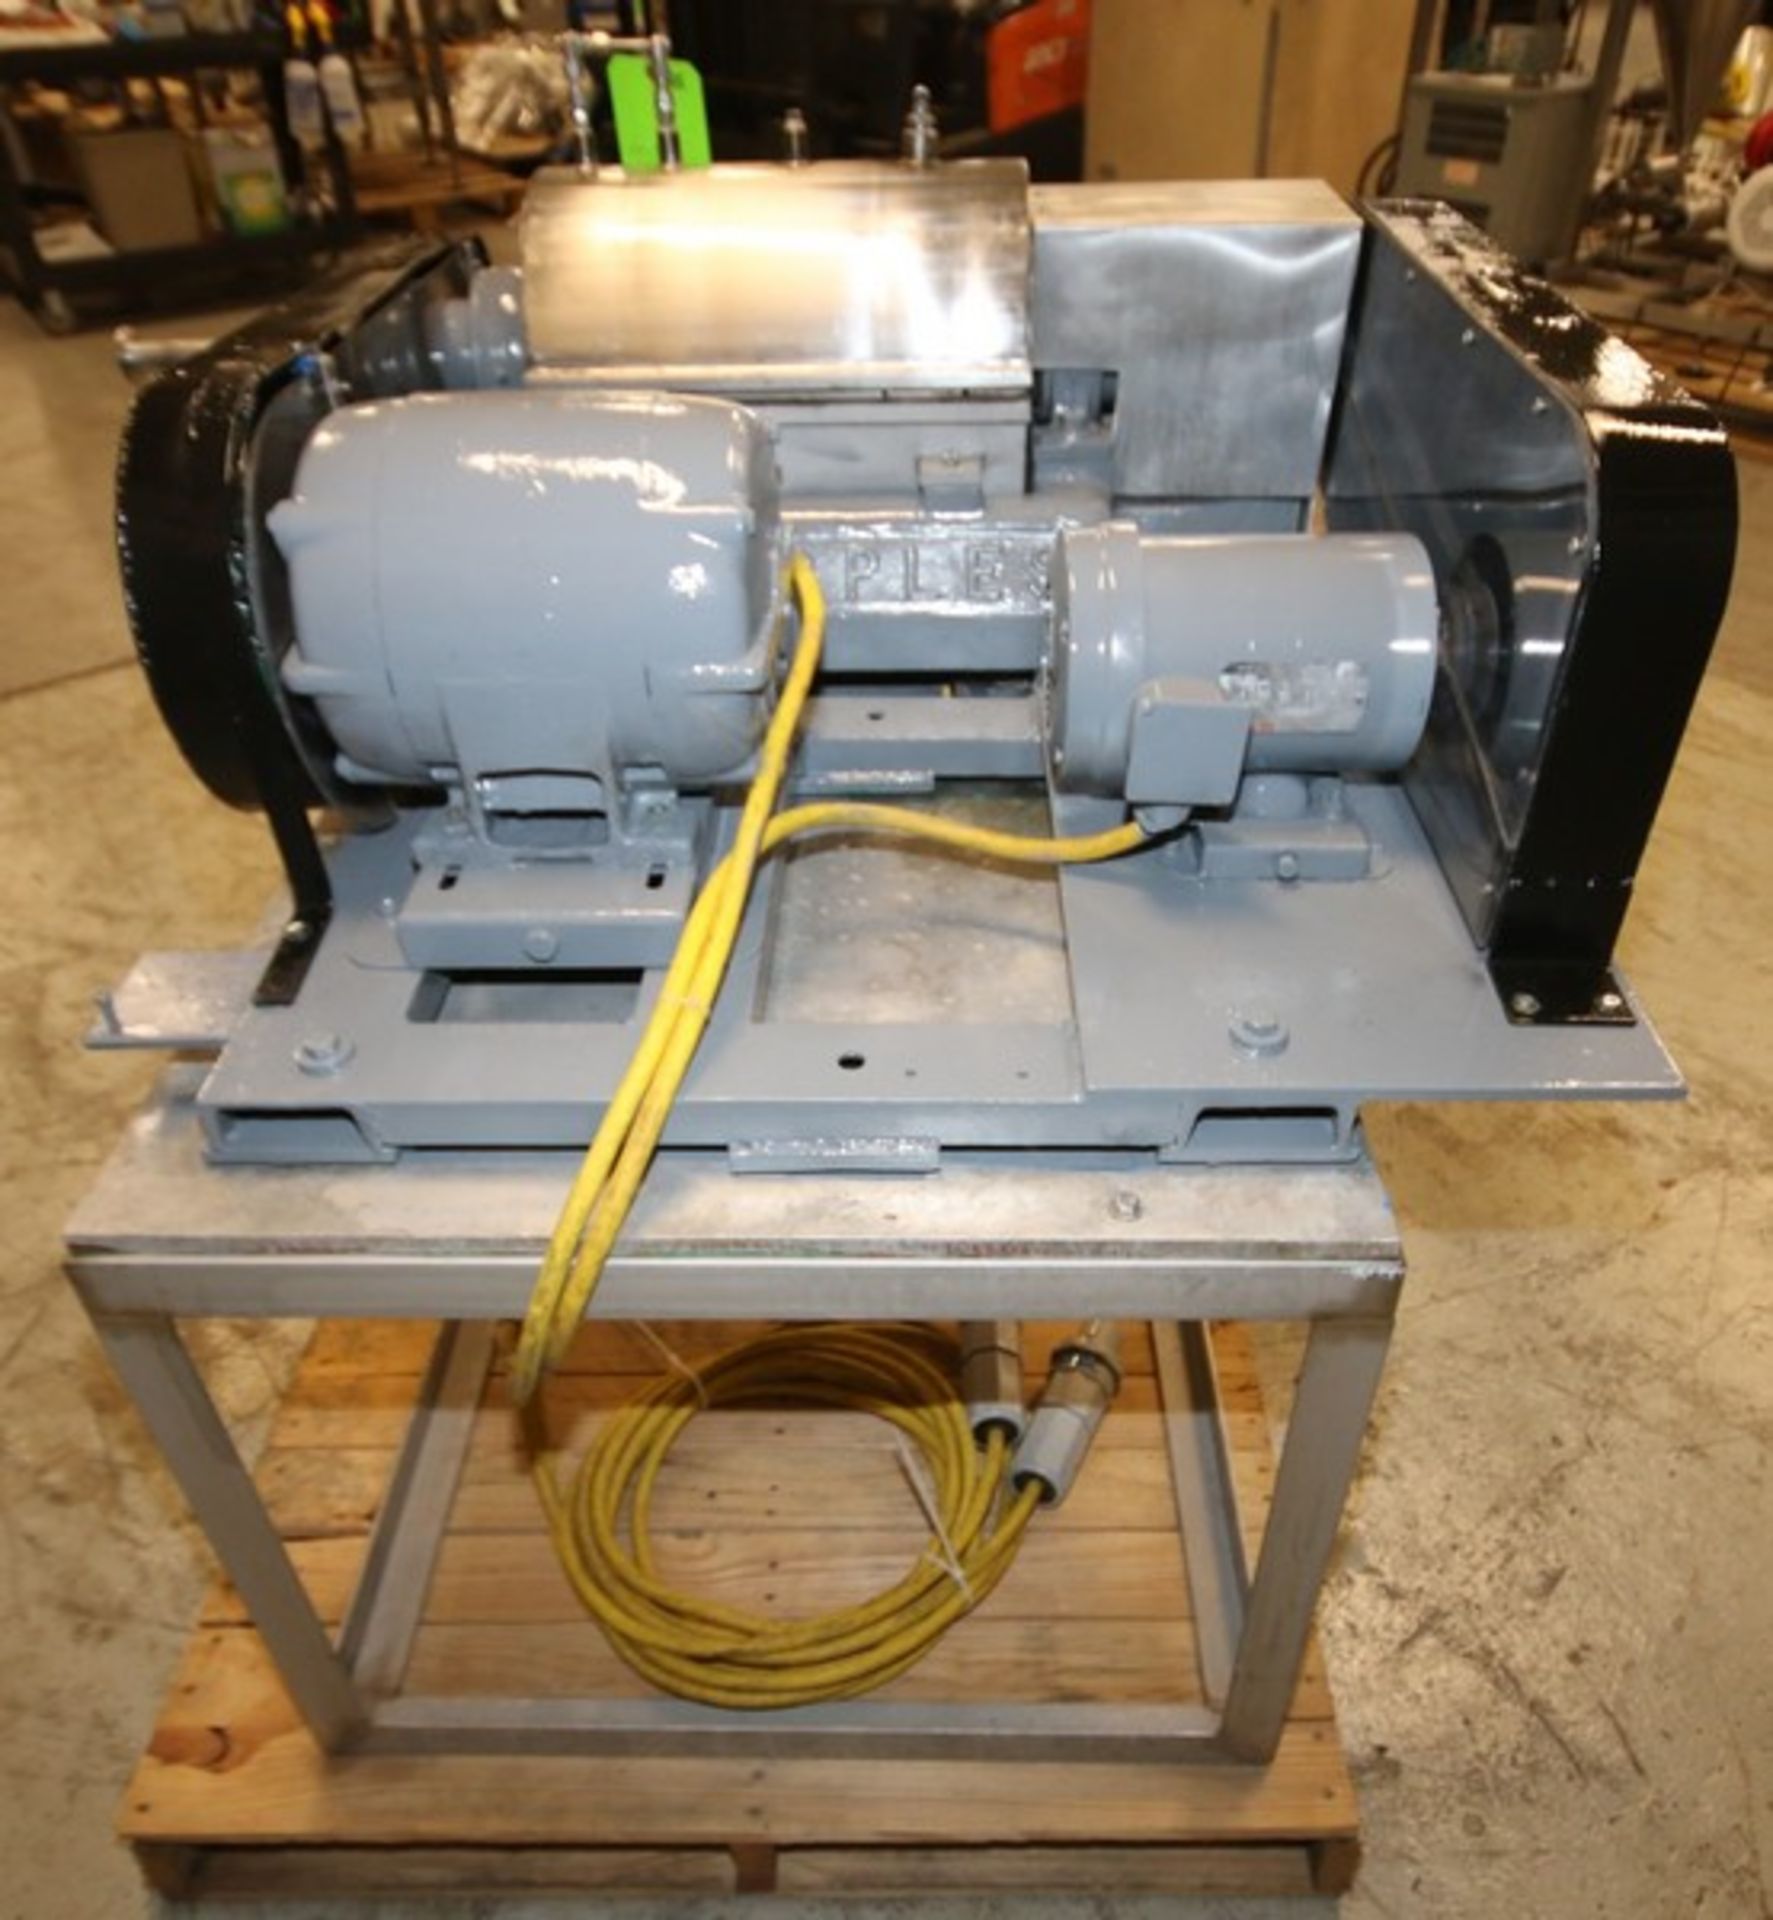 Sharples Decanter - Centrifuge, Type BM-PE40061PF449-1, SN 61-P600-193, Max Bowl Speed 5,000 rpm, - Image 6 of 14